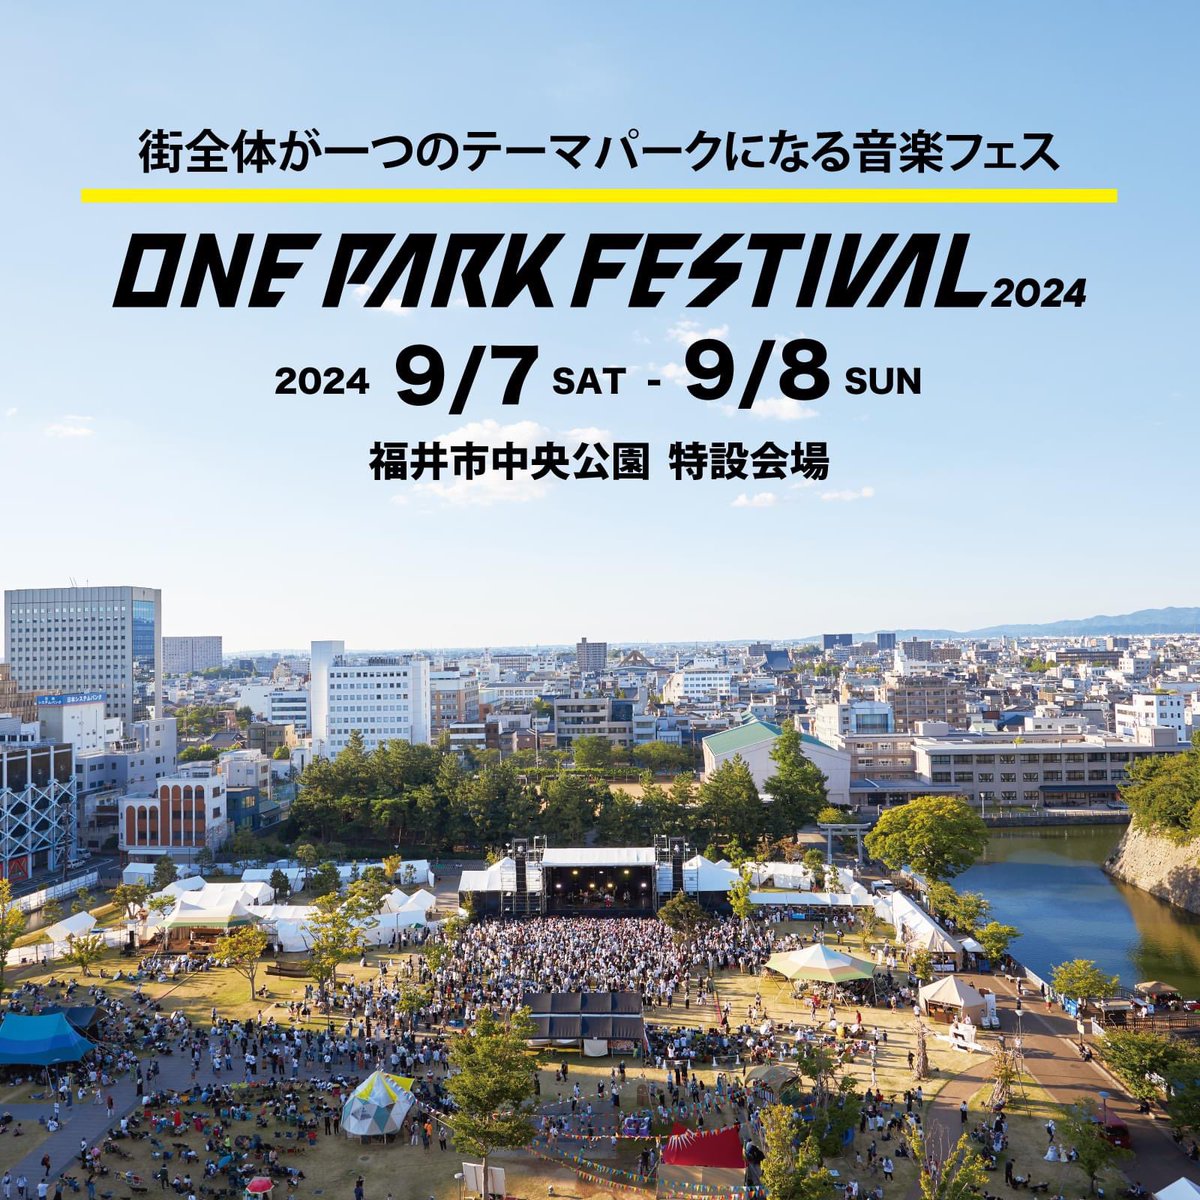 ONE PARK FESTIVAL 2024開催決定です。どうぞよろしく！
@opf_official @oneparkfestival #福井 #北陸新幹線